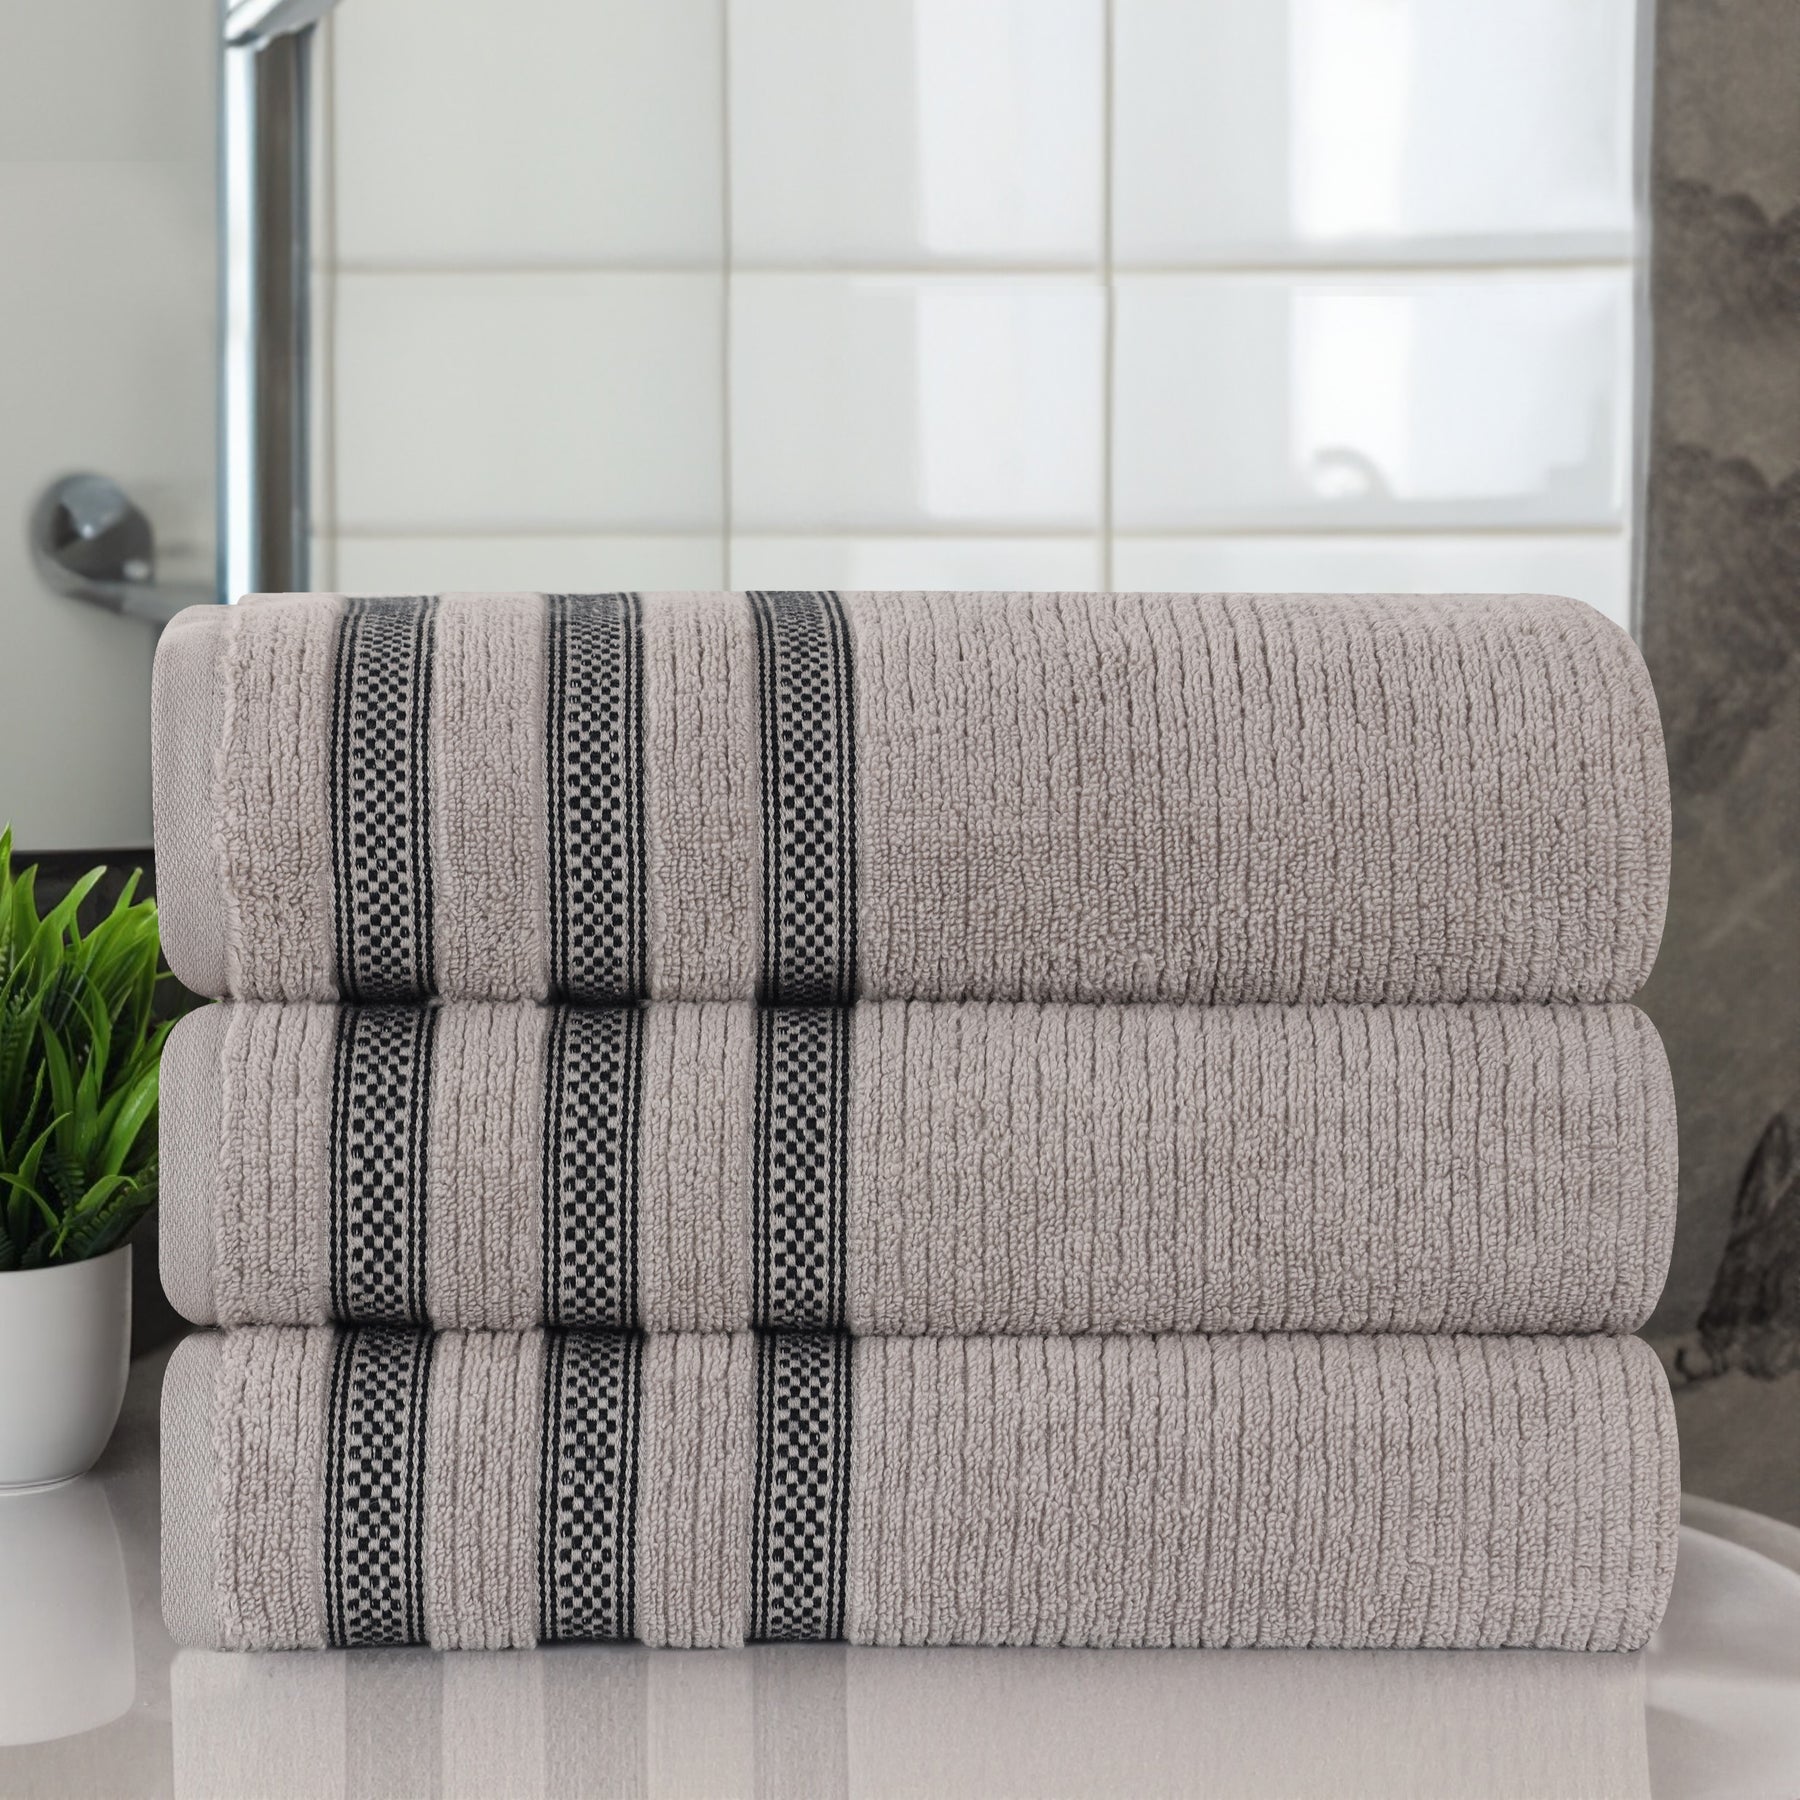 Zero Twist Cotton Ribbed Geometric Border Plush Bath Towel - Grey